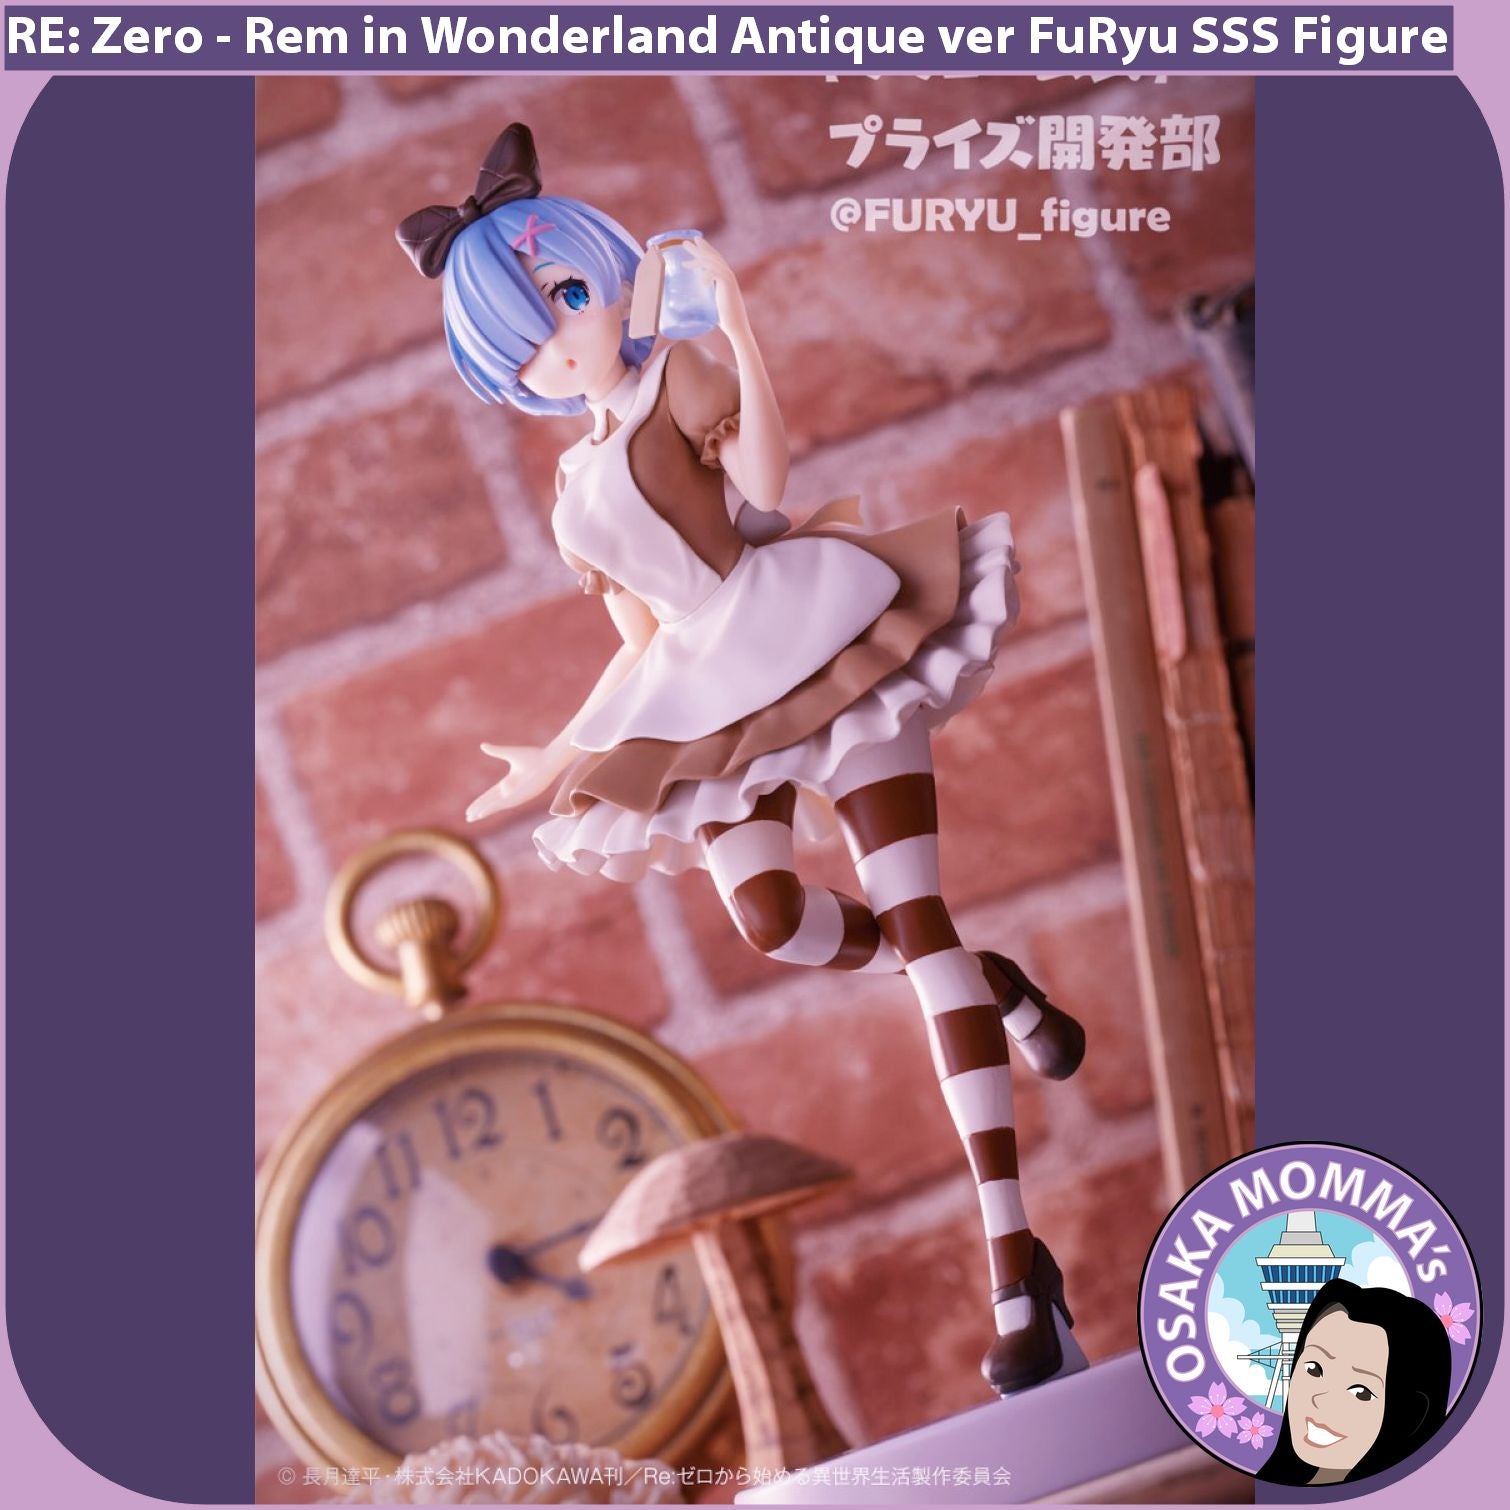 Rem in Wonderland Antique Ver. FuRyu Figure